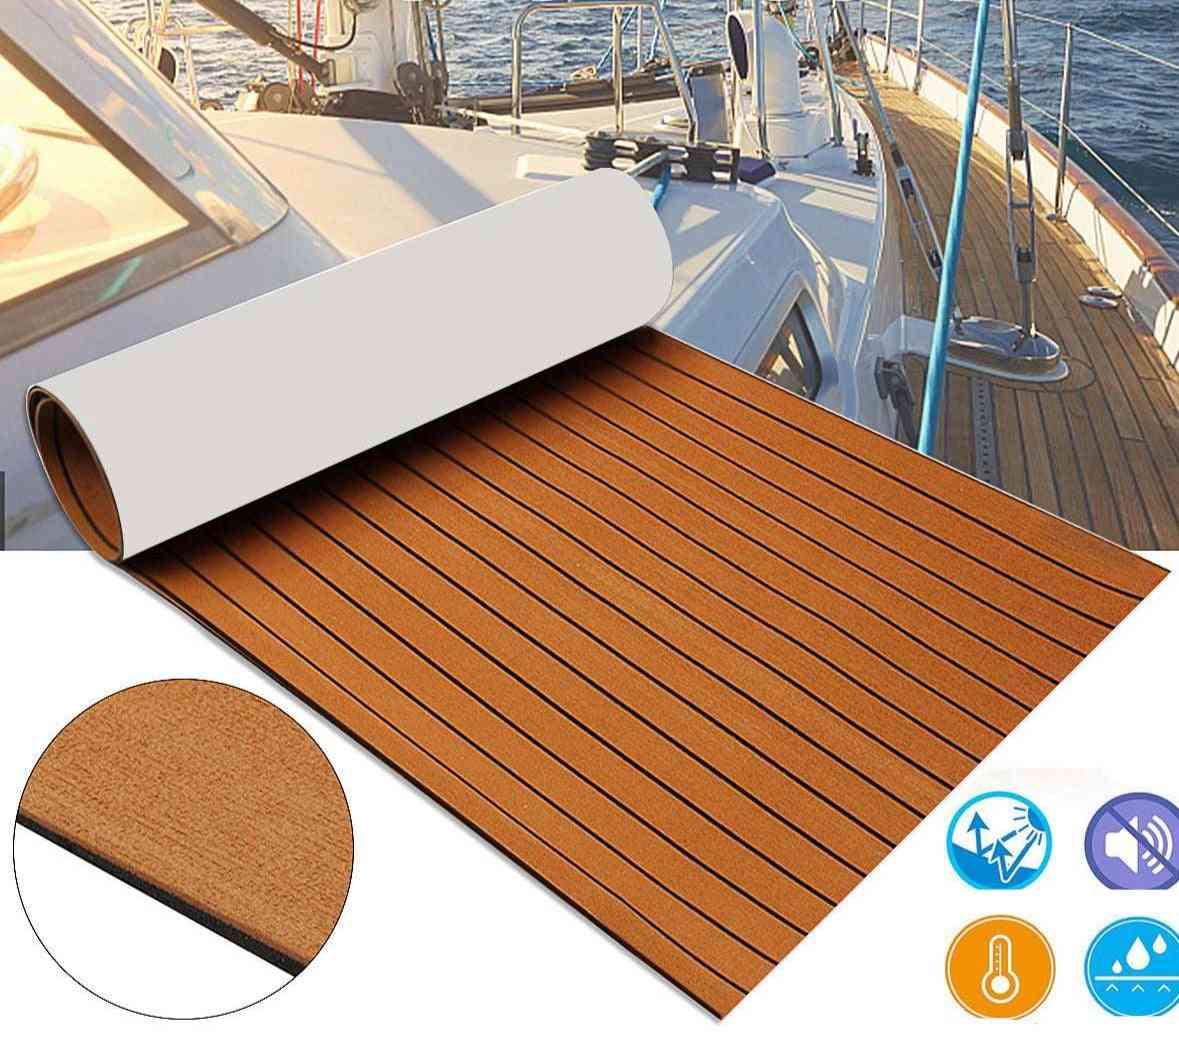 Self-adhesive Eva Foam Decking Sheet, Boat Marine Flooring